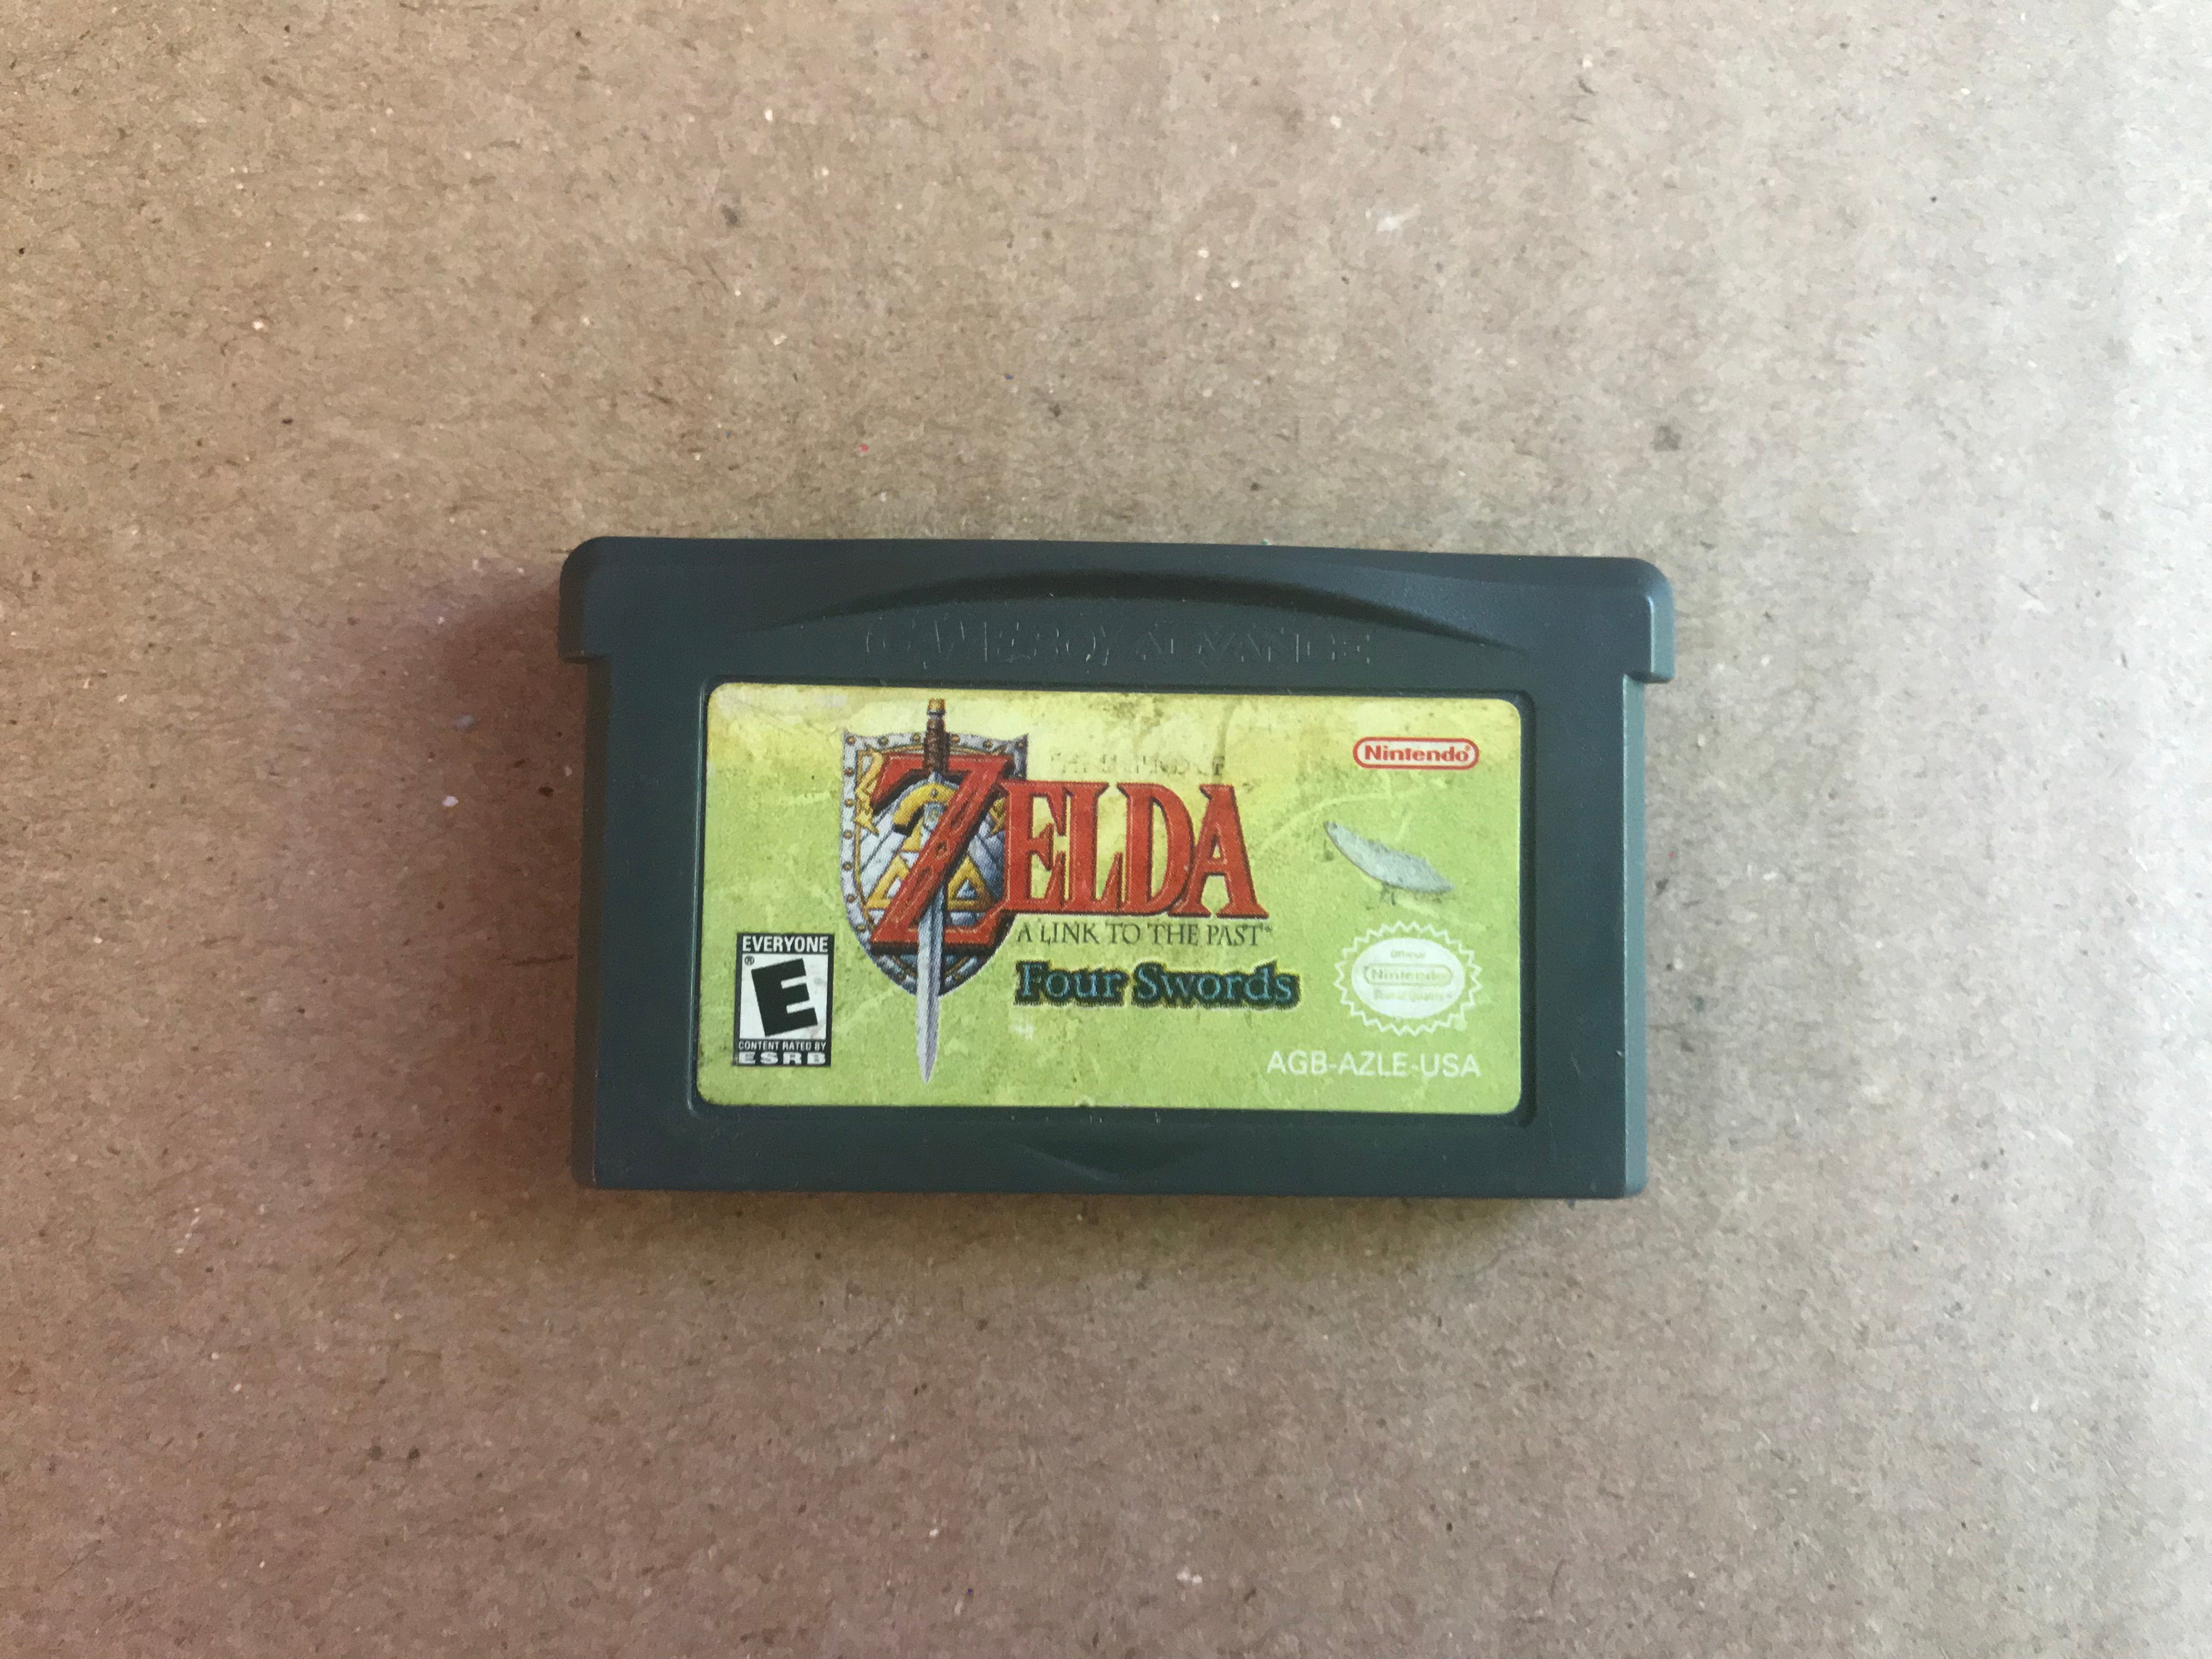 Legend of Zelda: A Link to the Past Four Swords